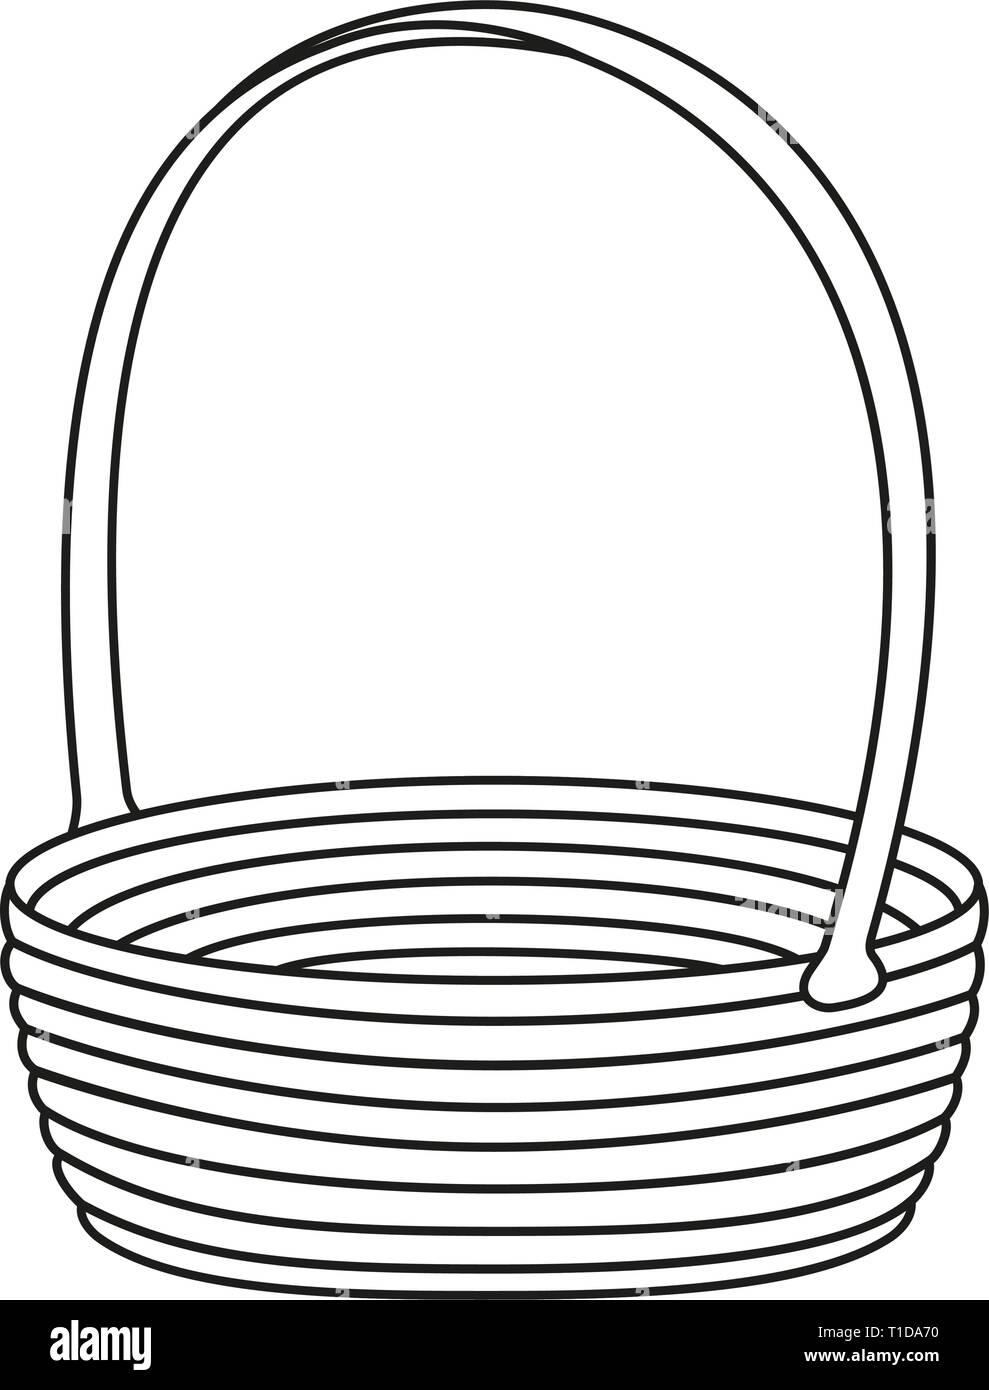 Line art black and white empty wicker basket Stock Vector